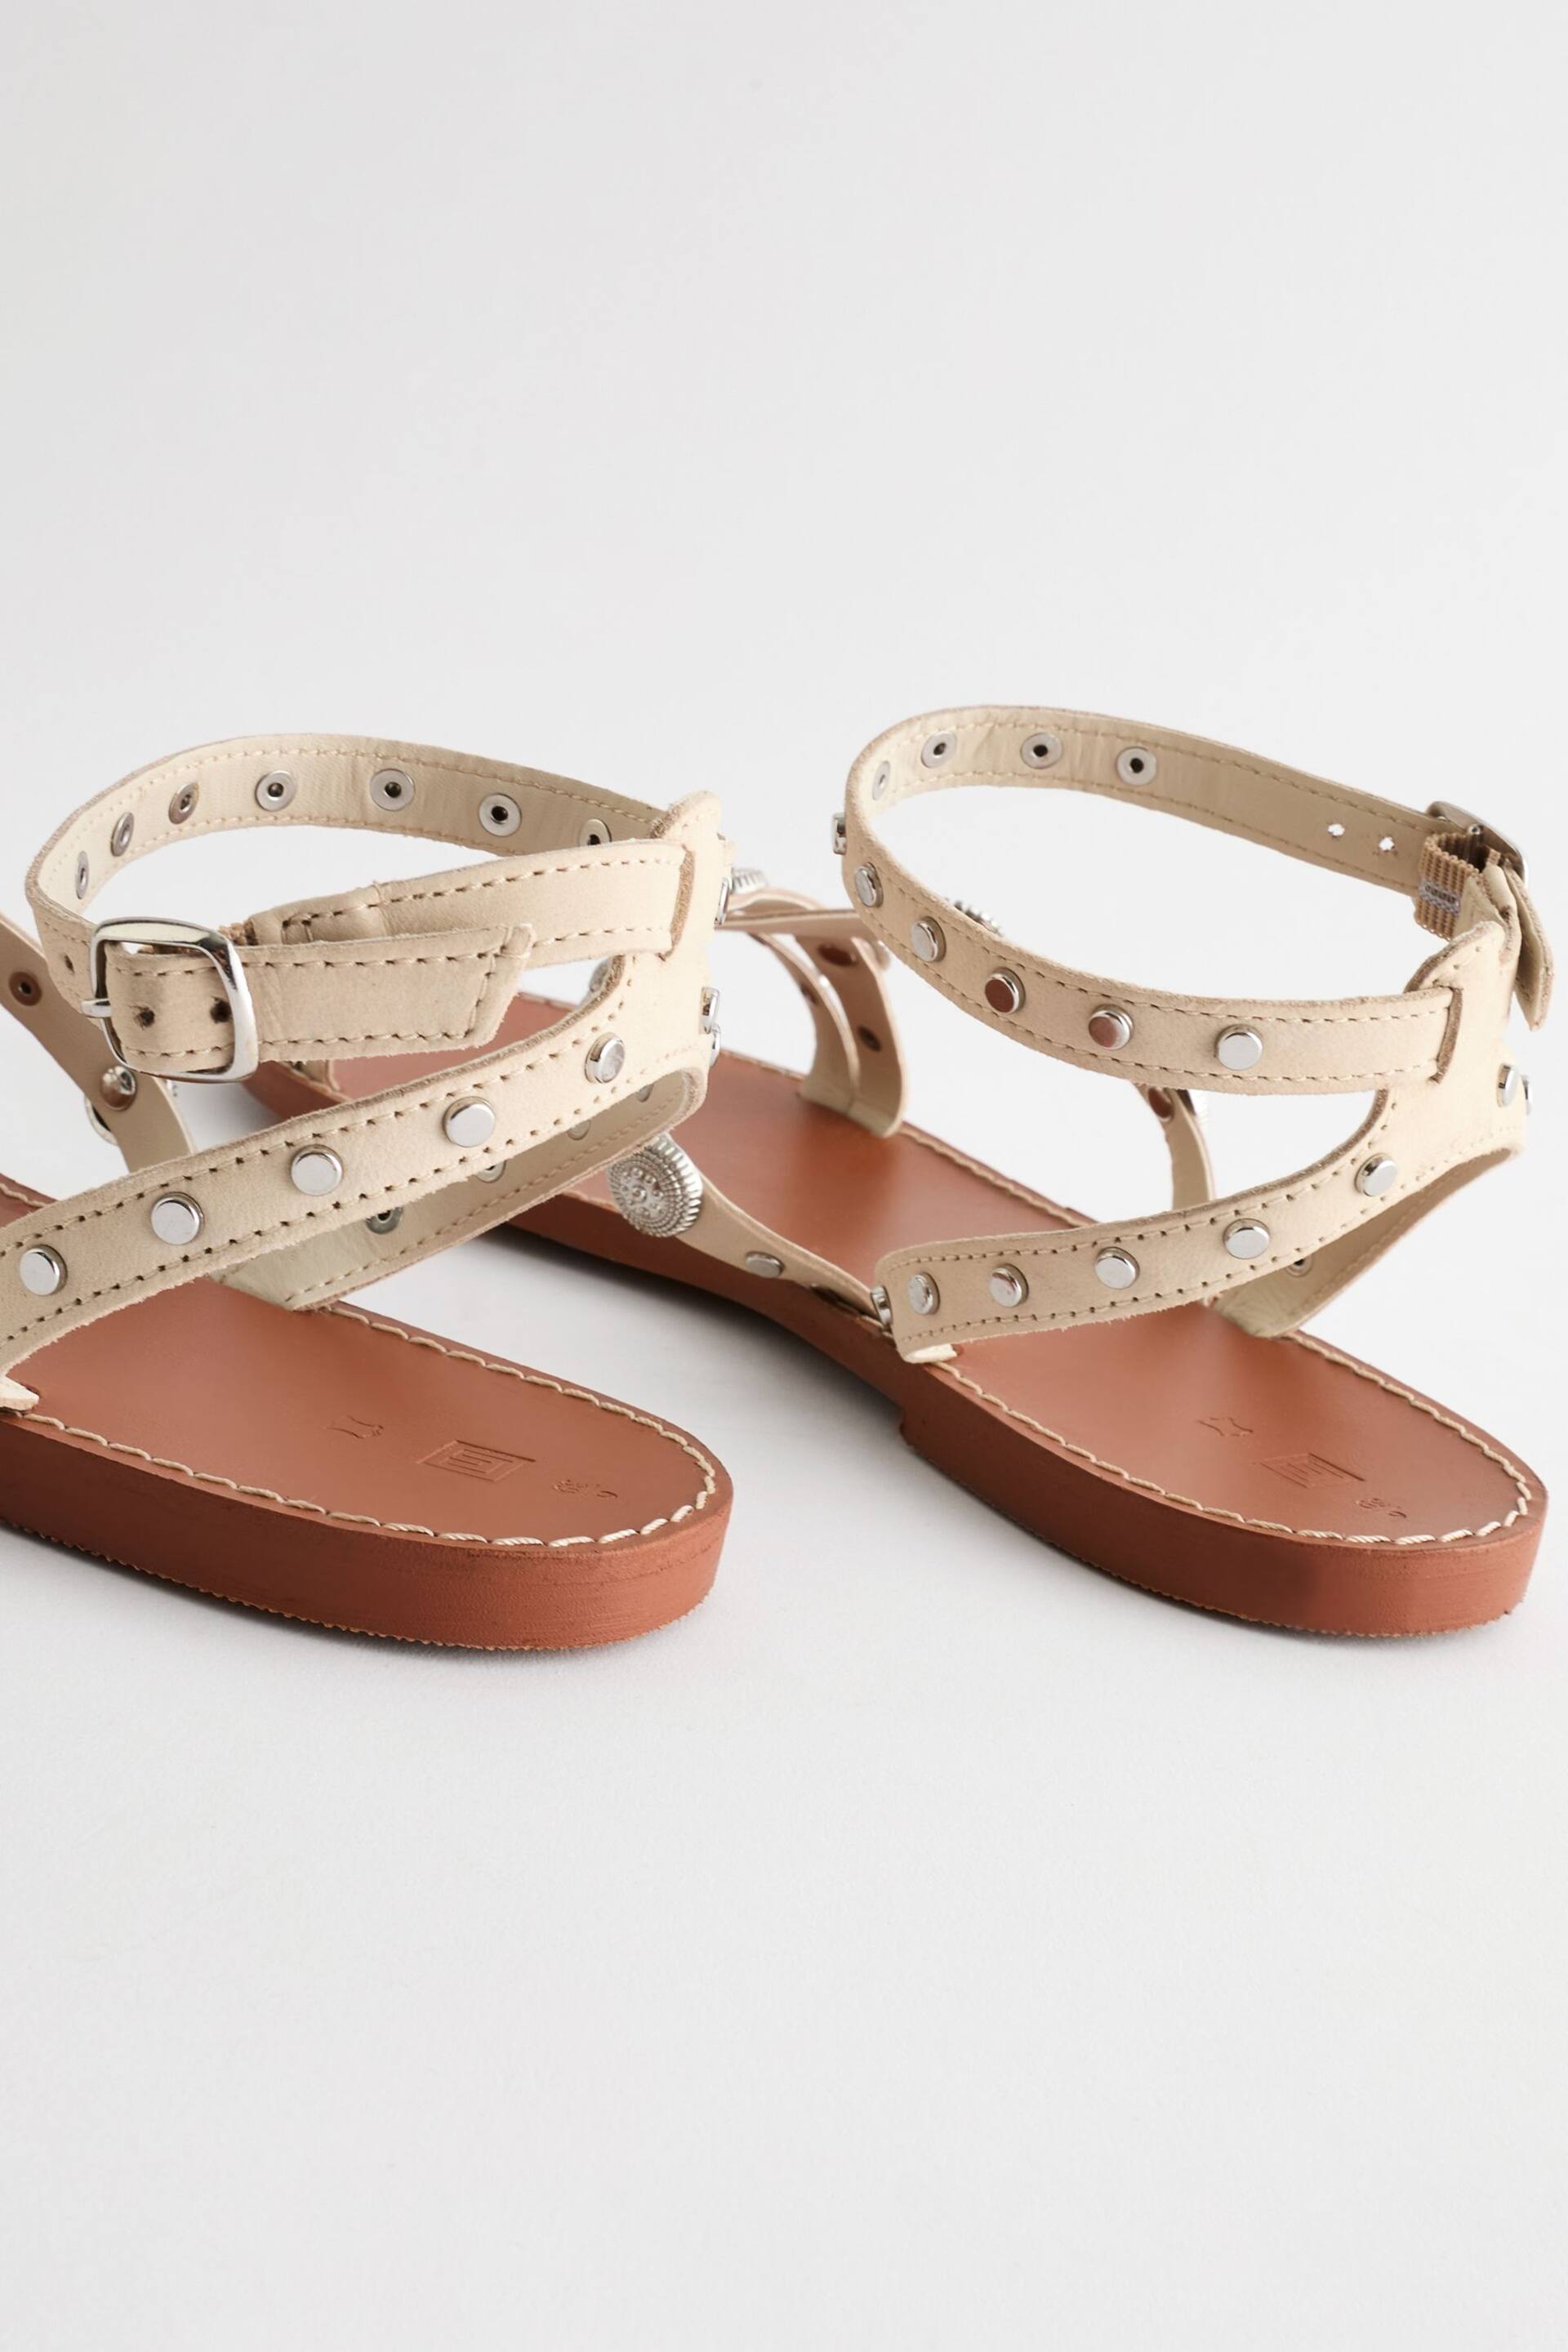 Bone Leather Studded Flat Sandals - Image 4 of 5